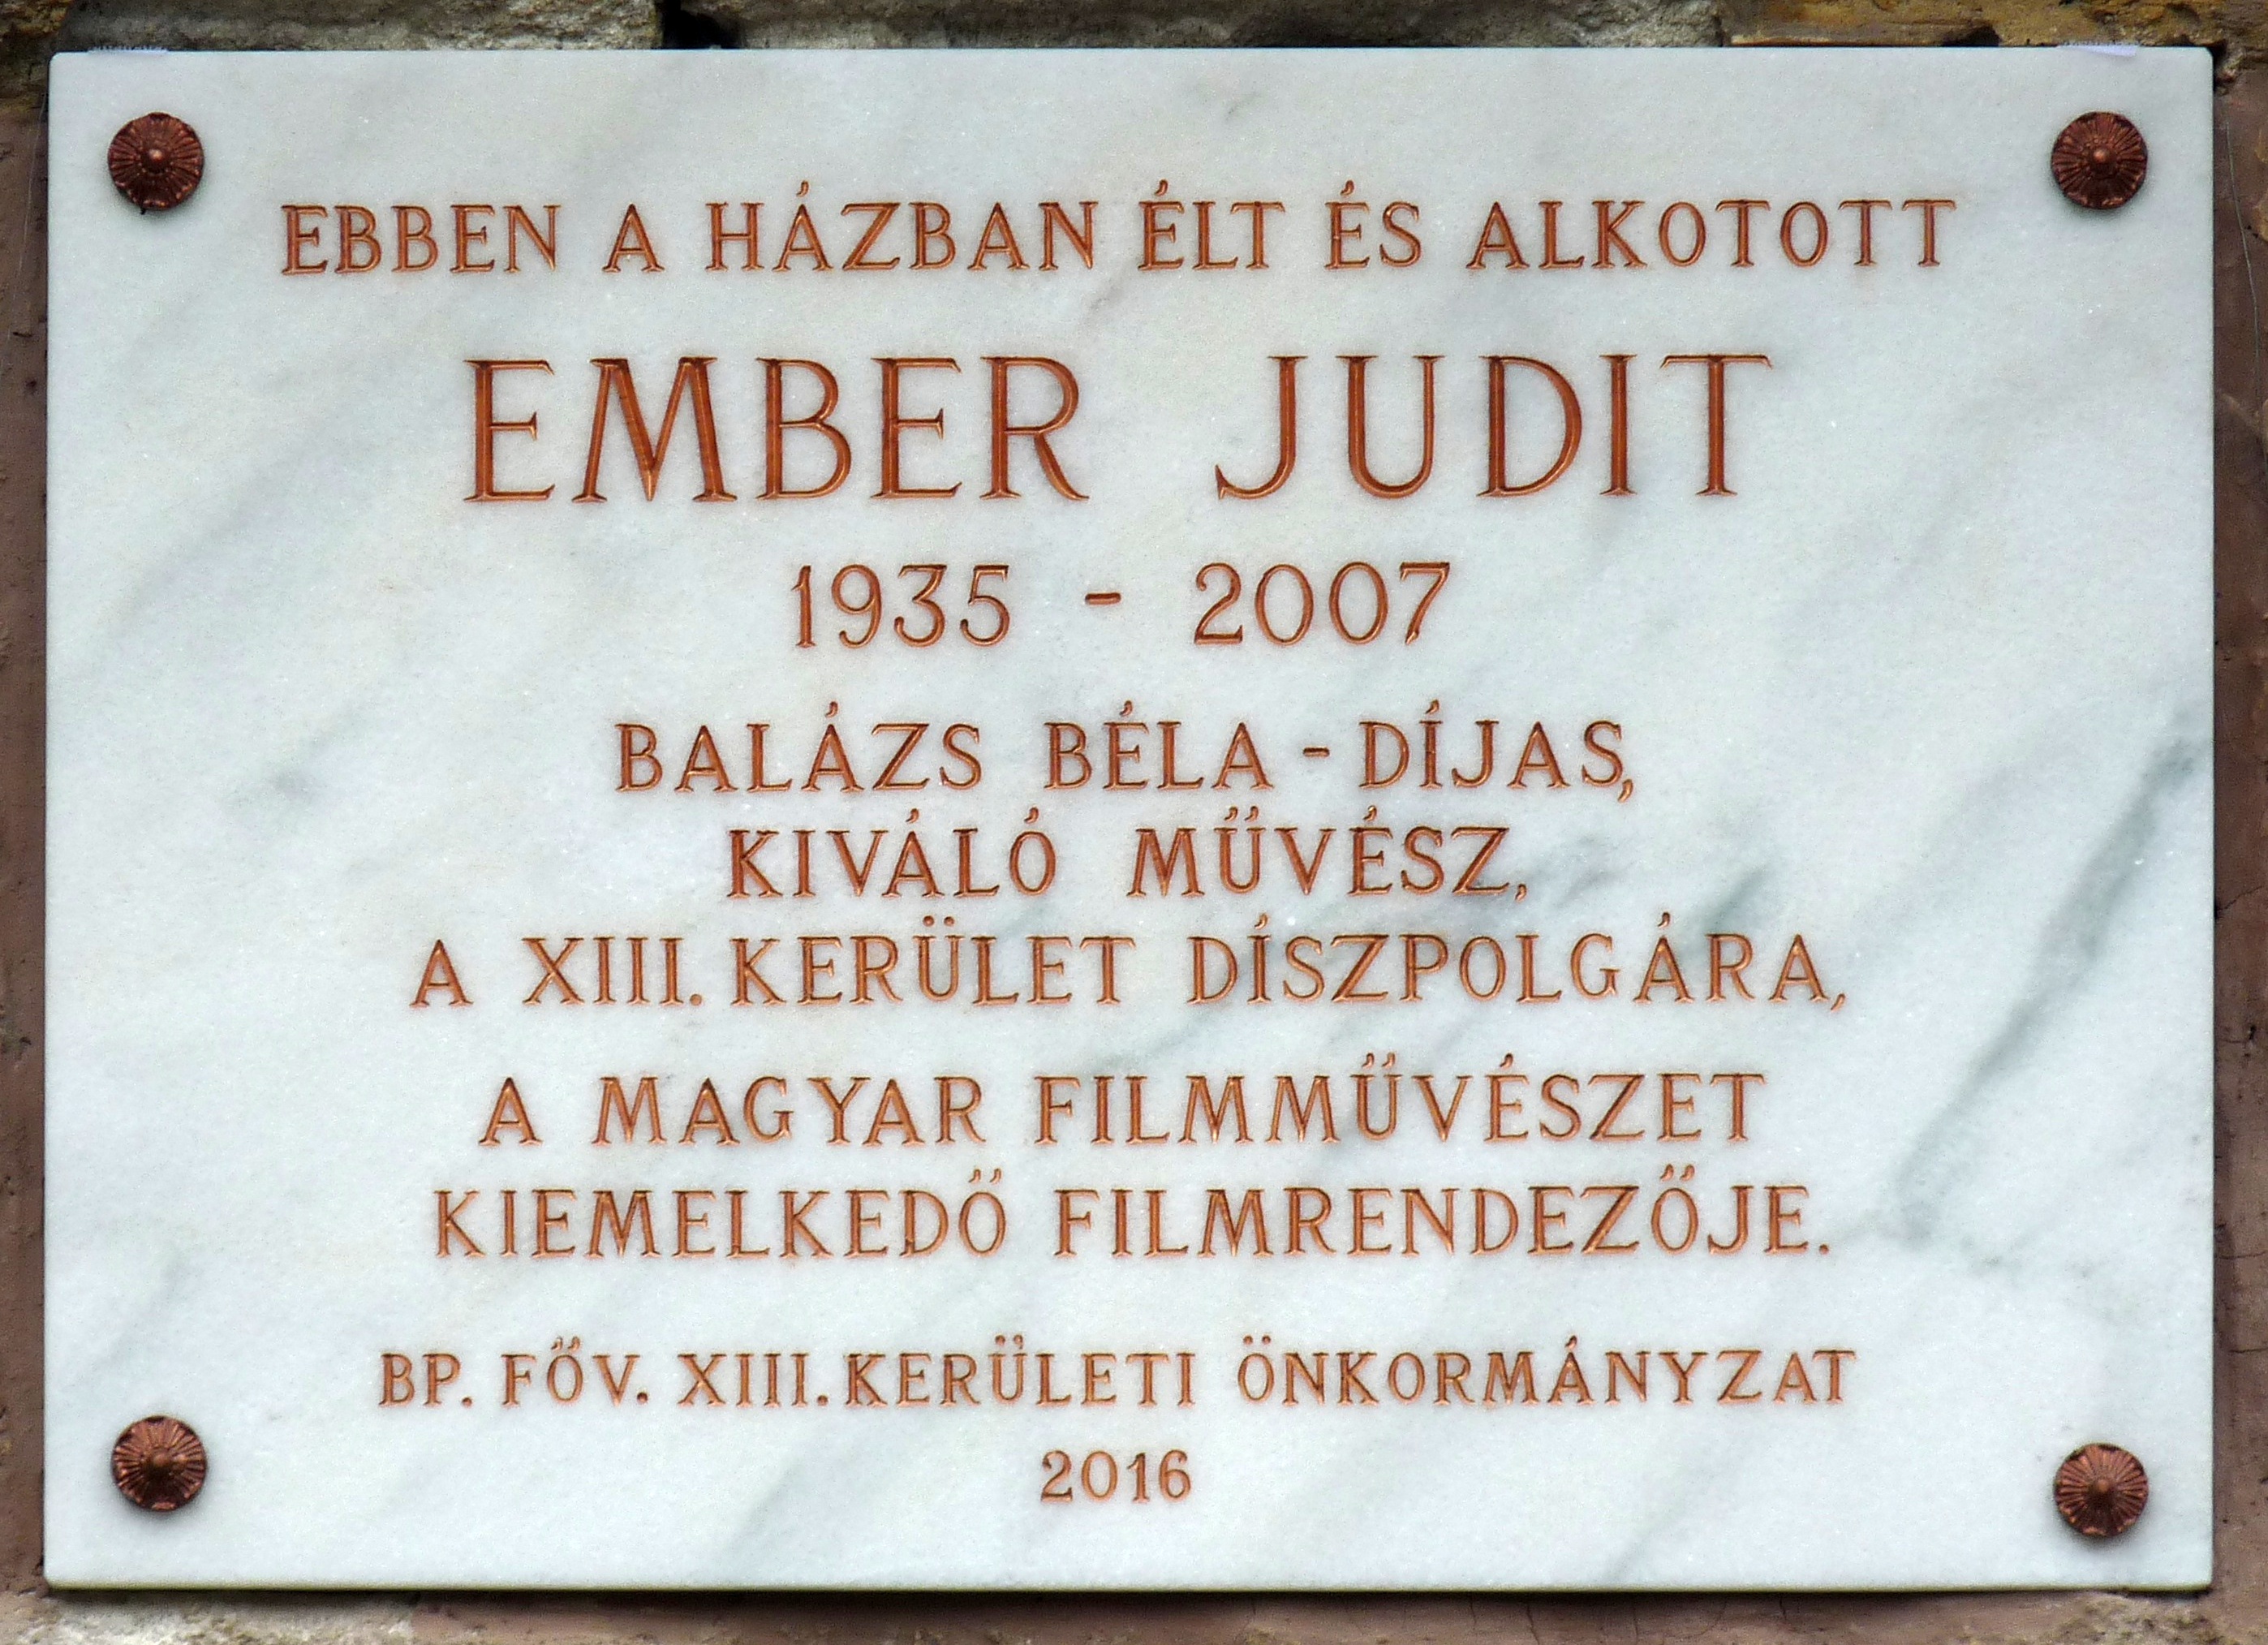 Memorial tablet for Judit Ember.